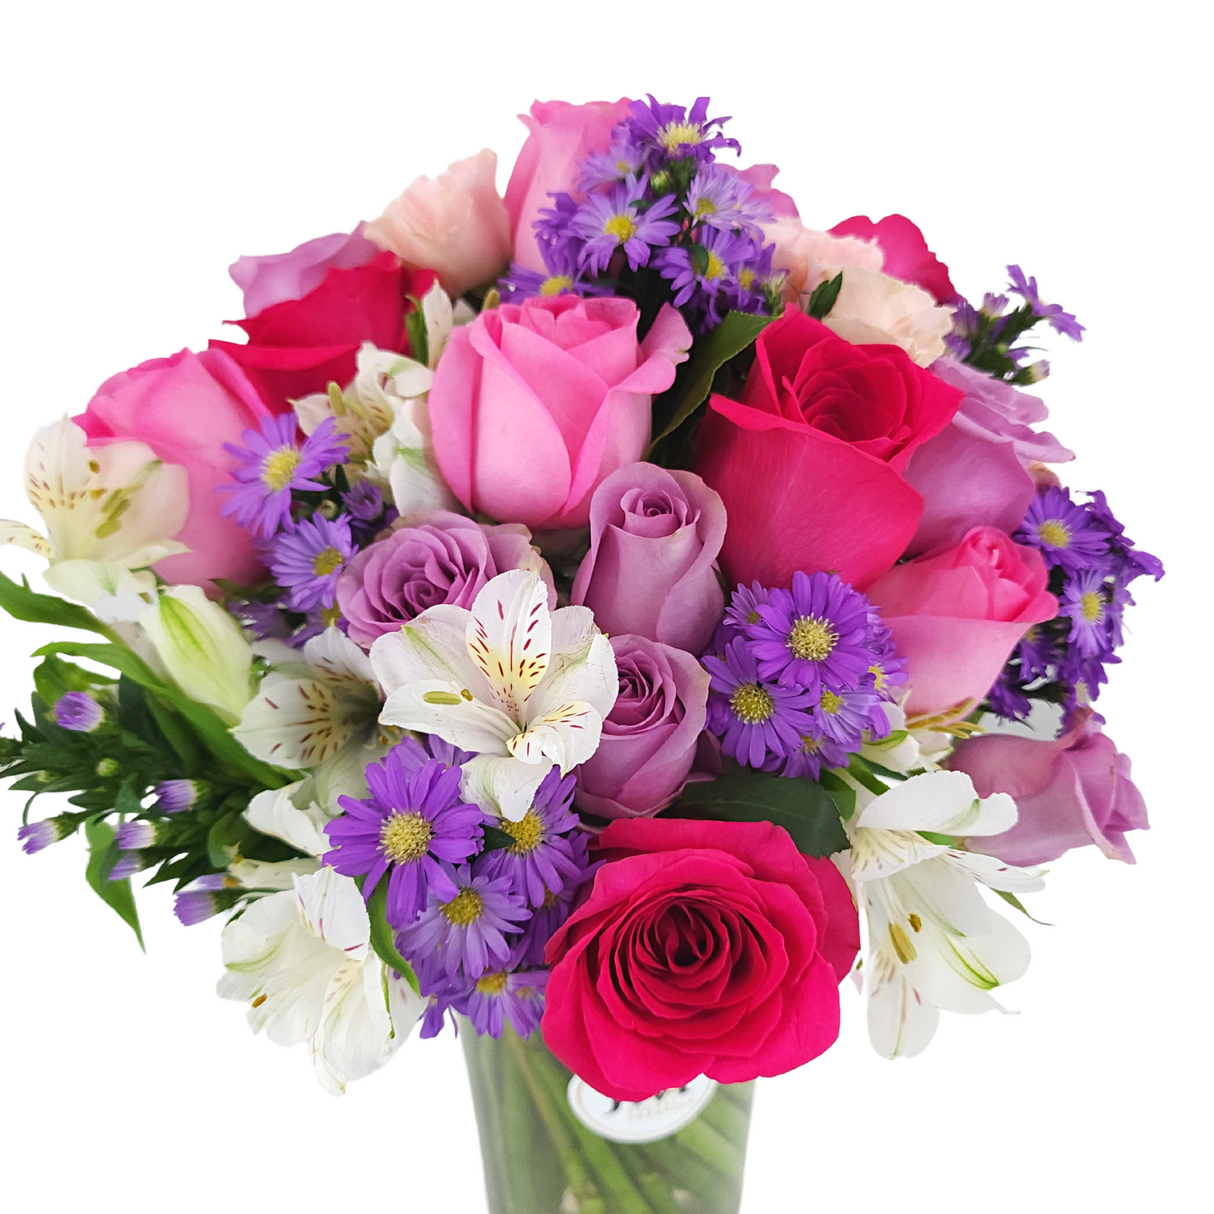 emma Purple and Pink Roses Vase Arrangement Birthday Flower Bouquet Singapore